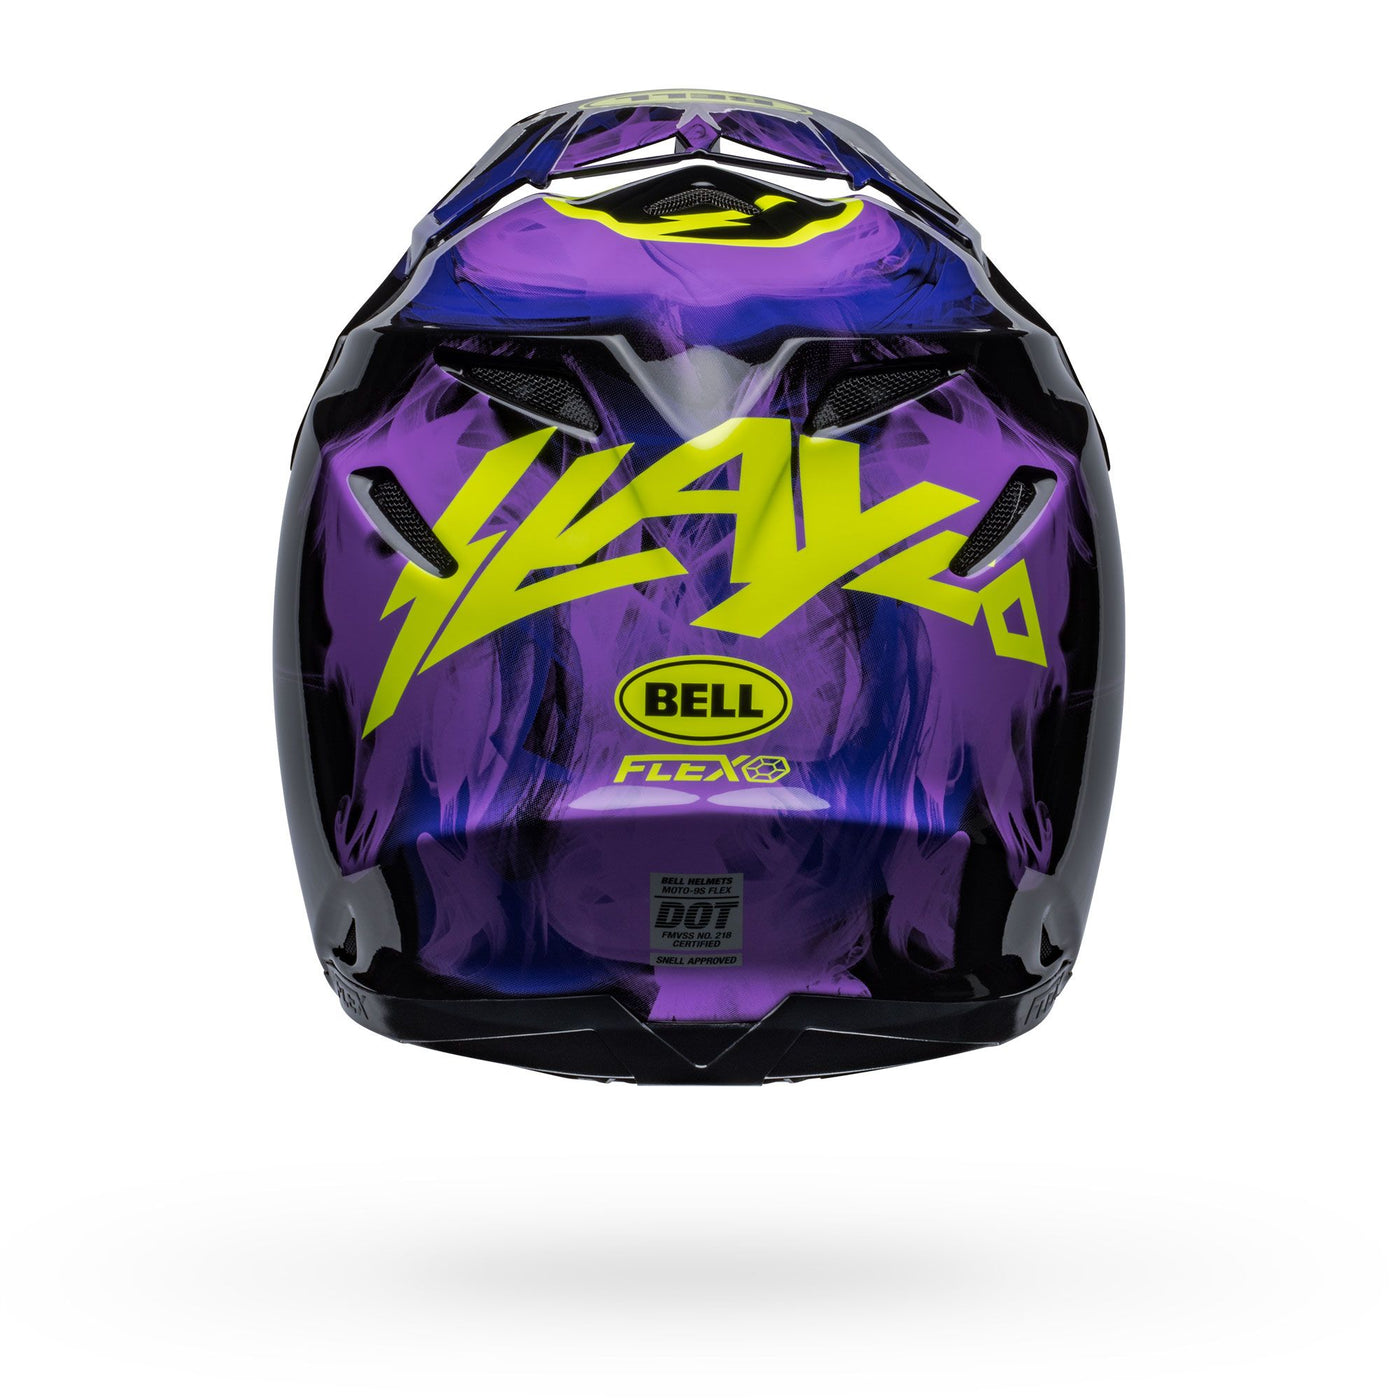 bell moto 9s flex dirt motorcycle helmet slayco gloss black purple back